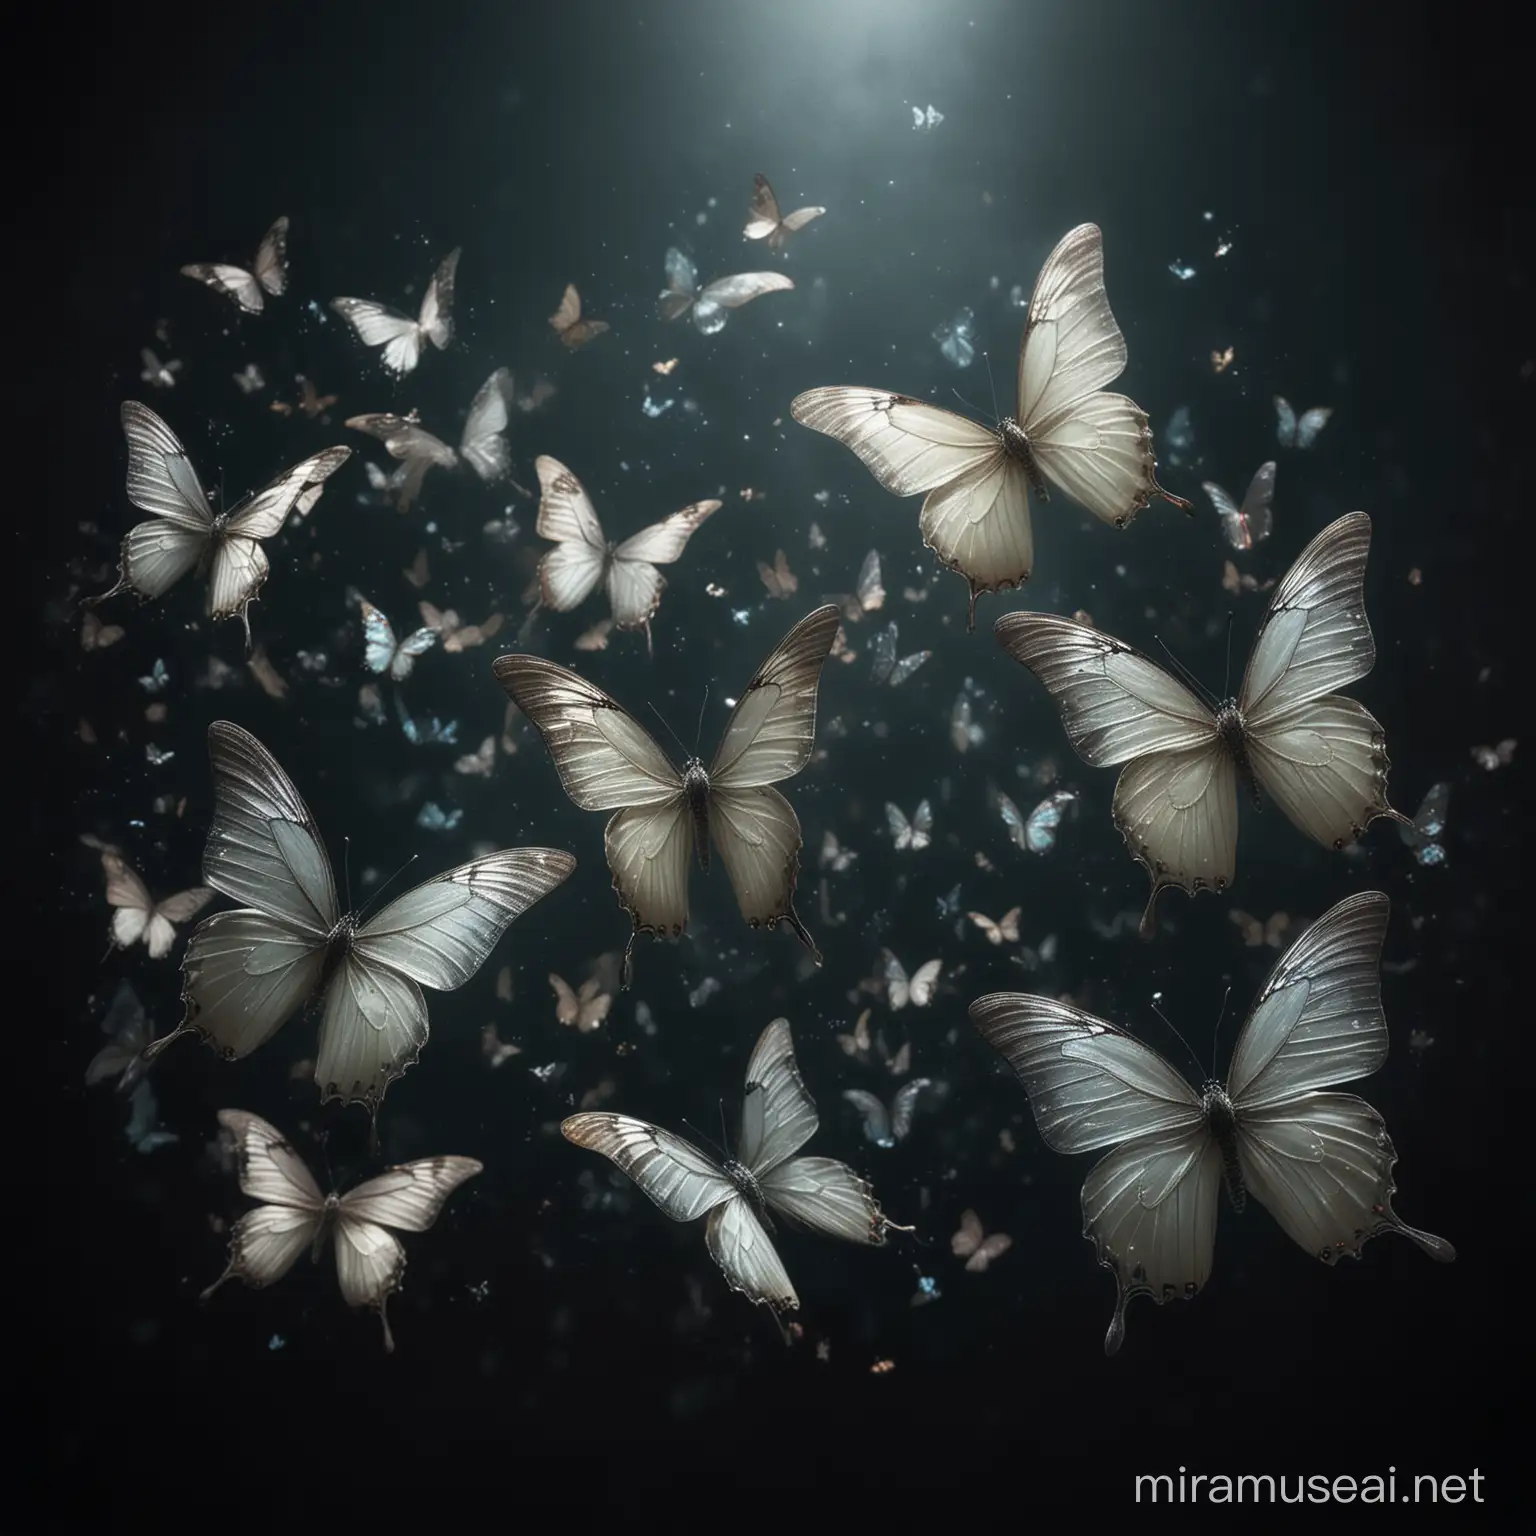 Ethereal Butterflies Dancing in Enigmatic Darkness